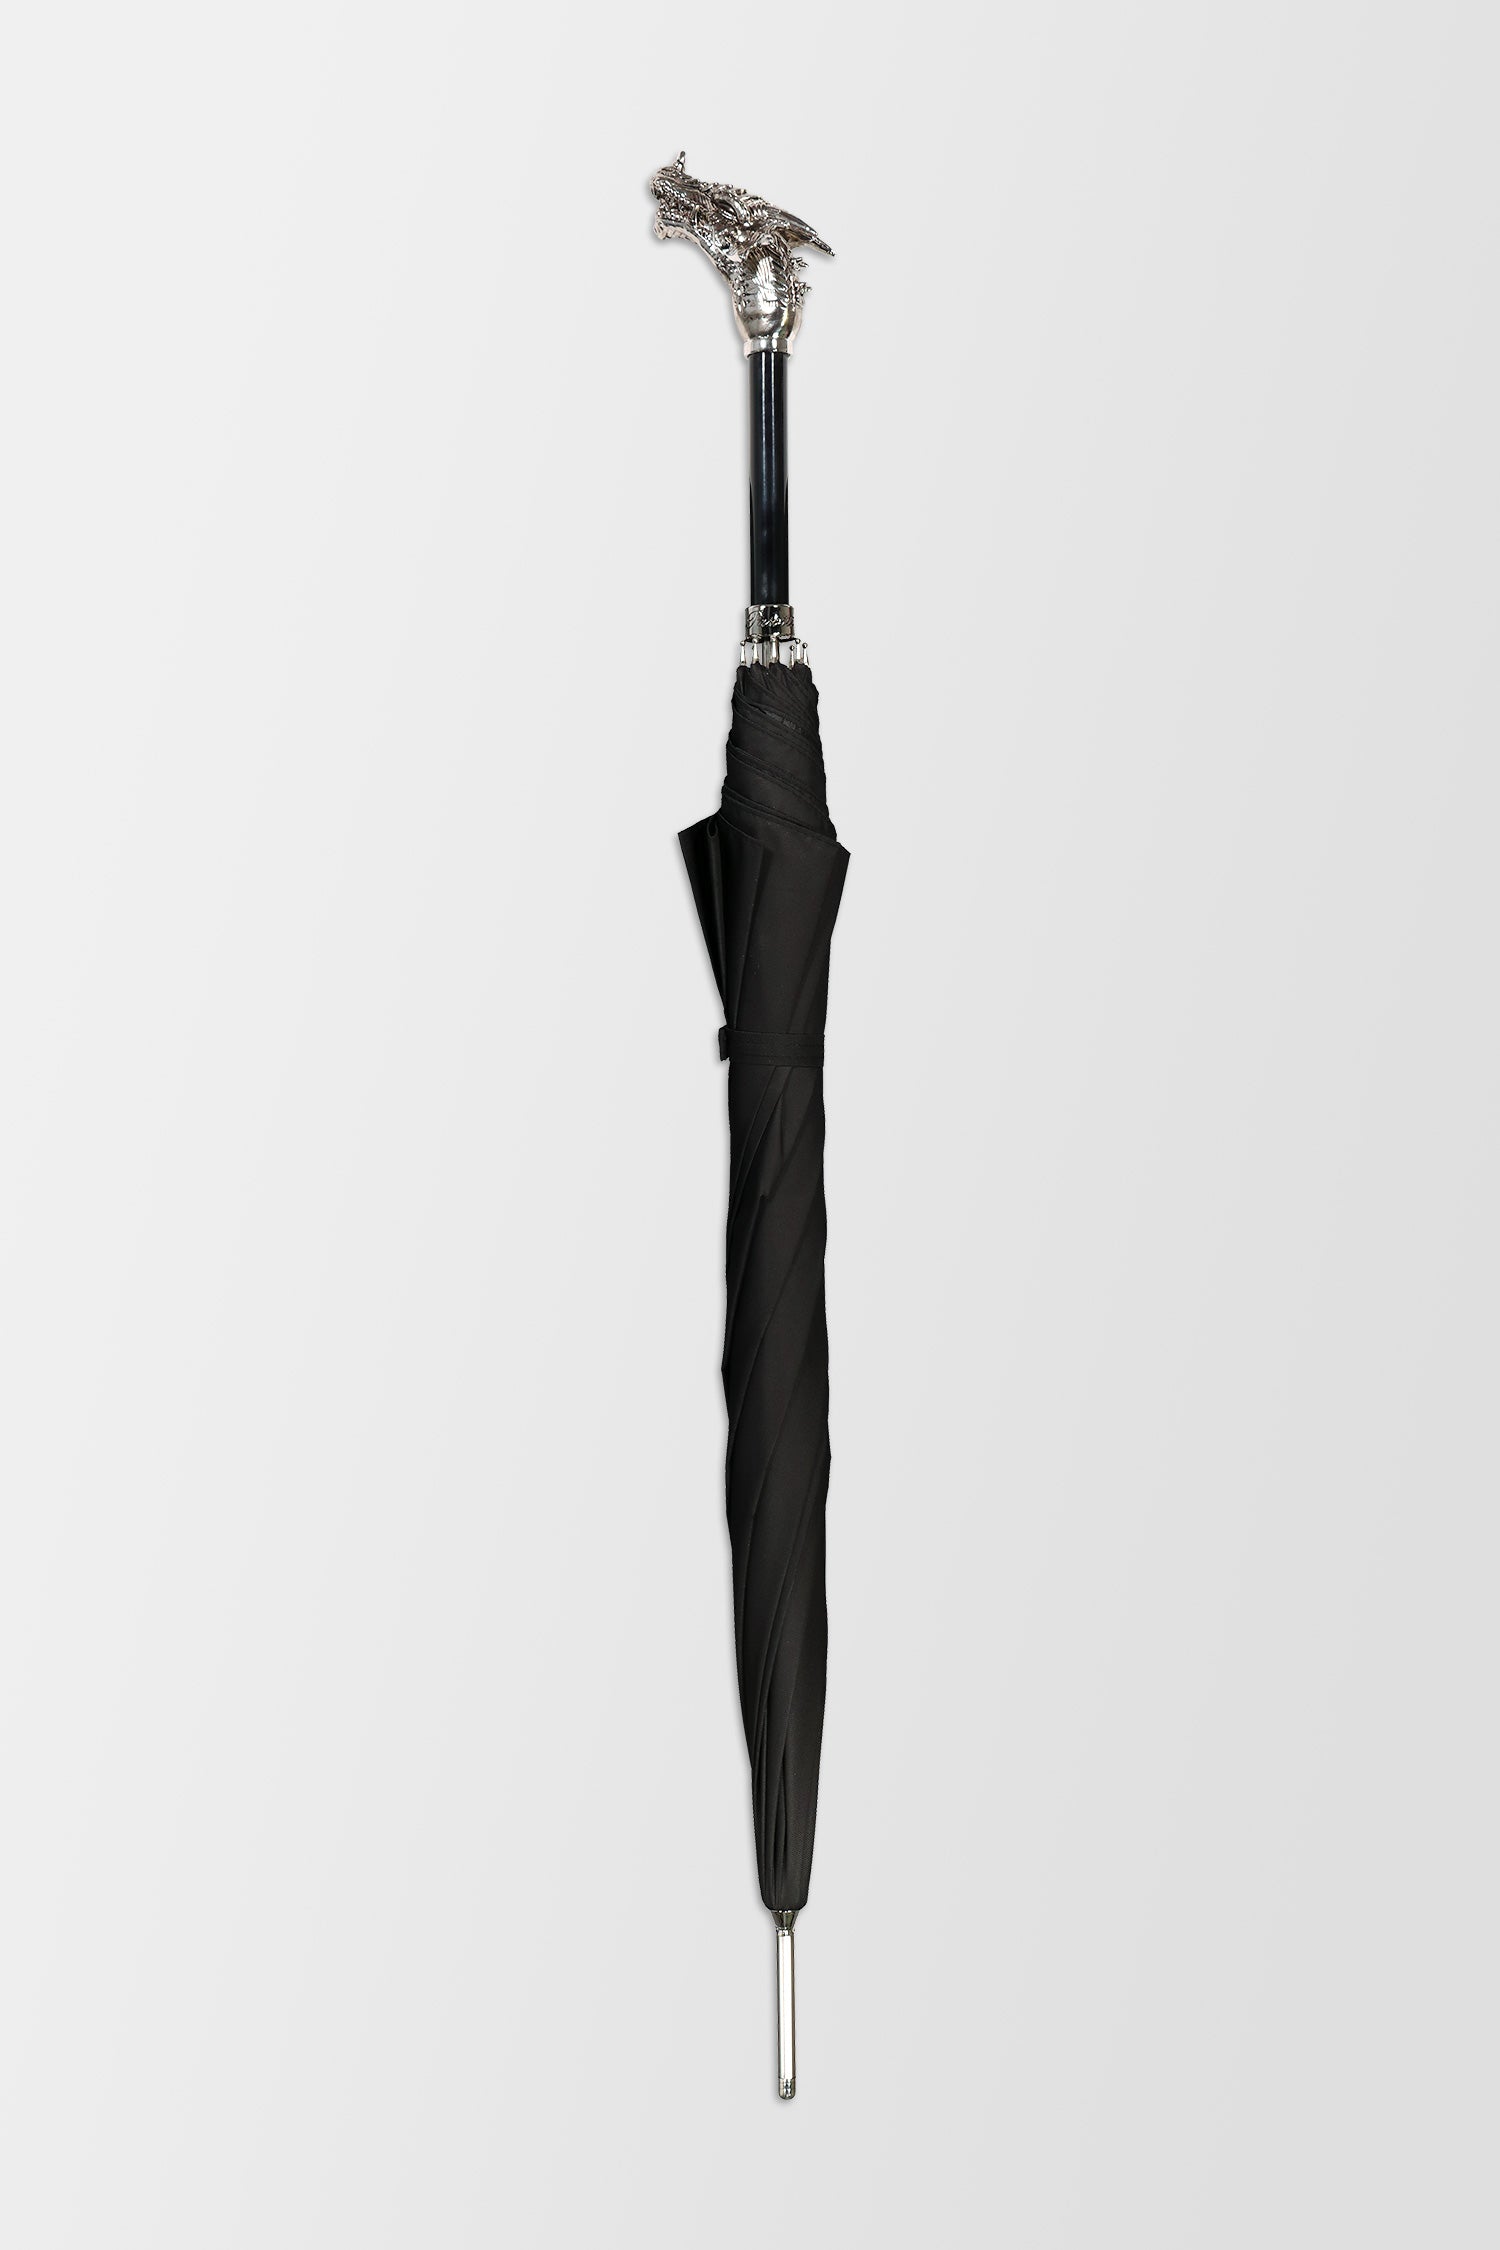 Pasotti Black Dragon Umbrella